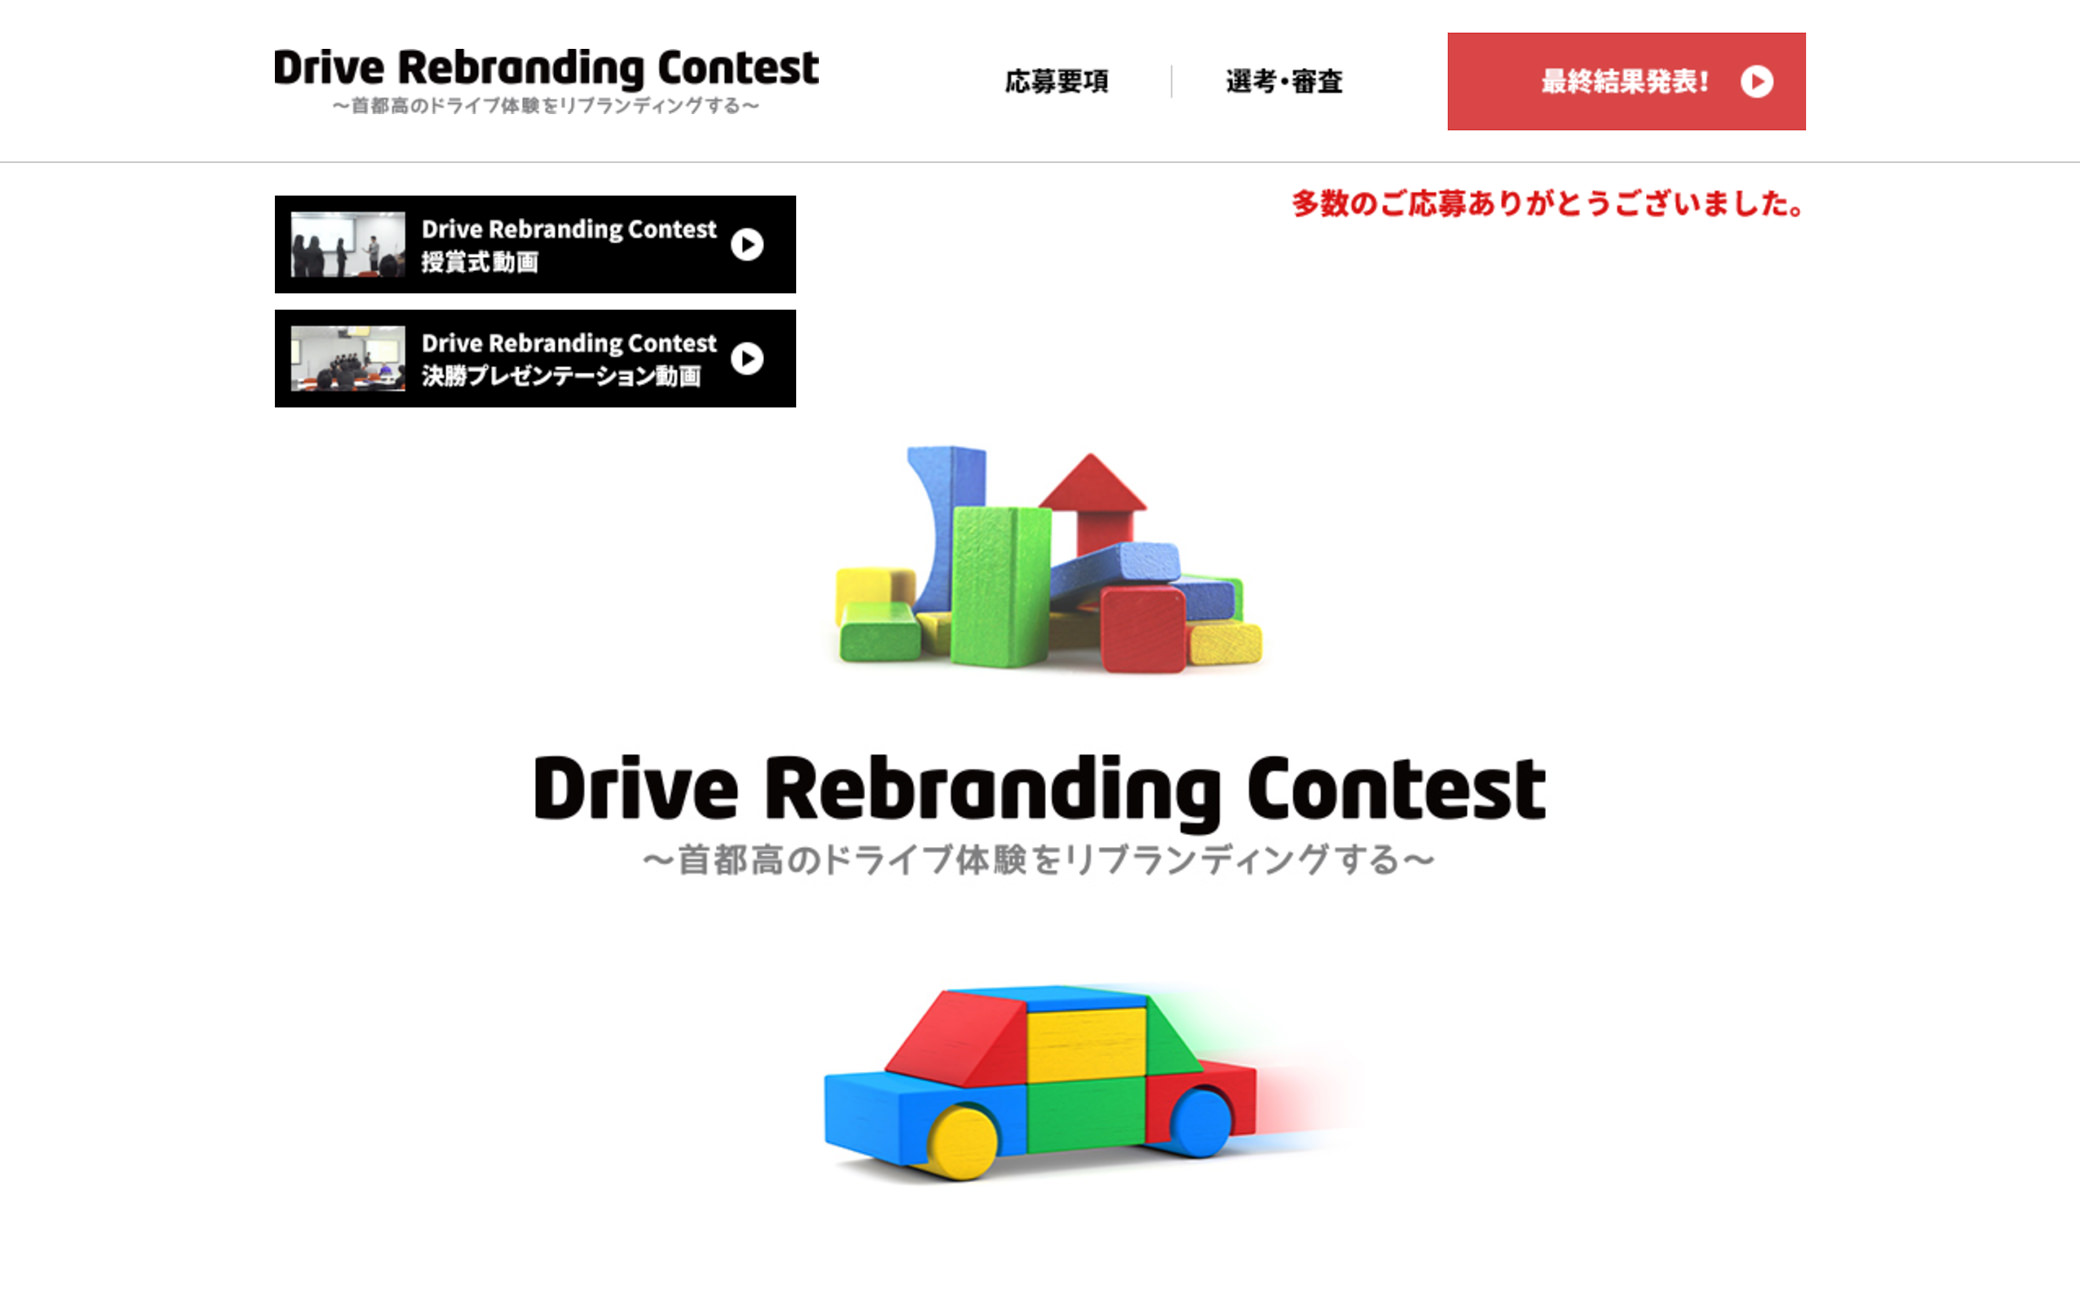 Drive Rebramdimg Contest